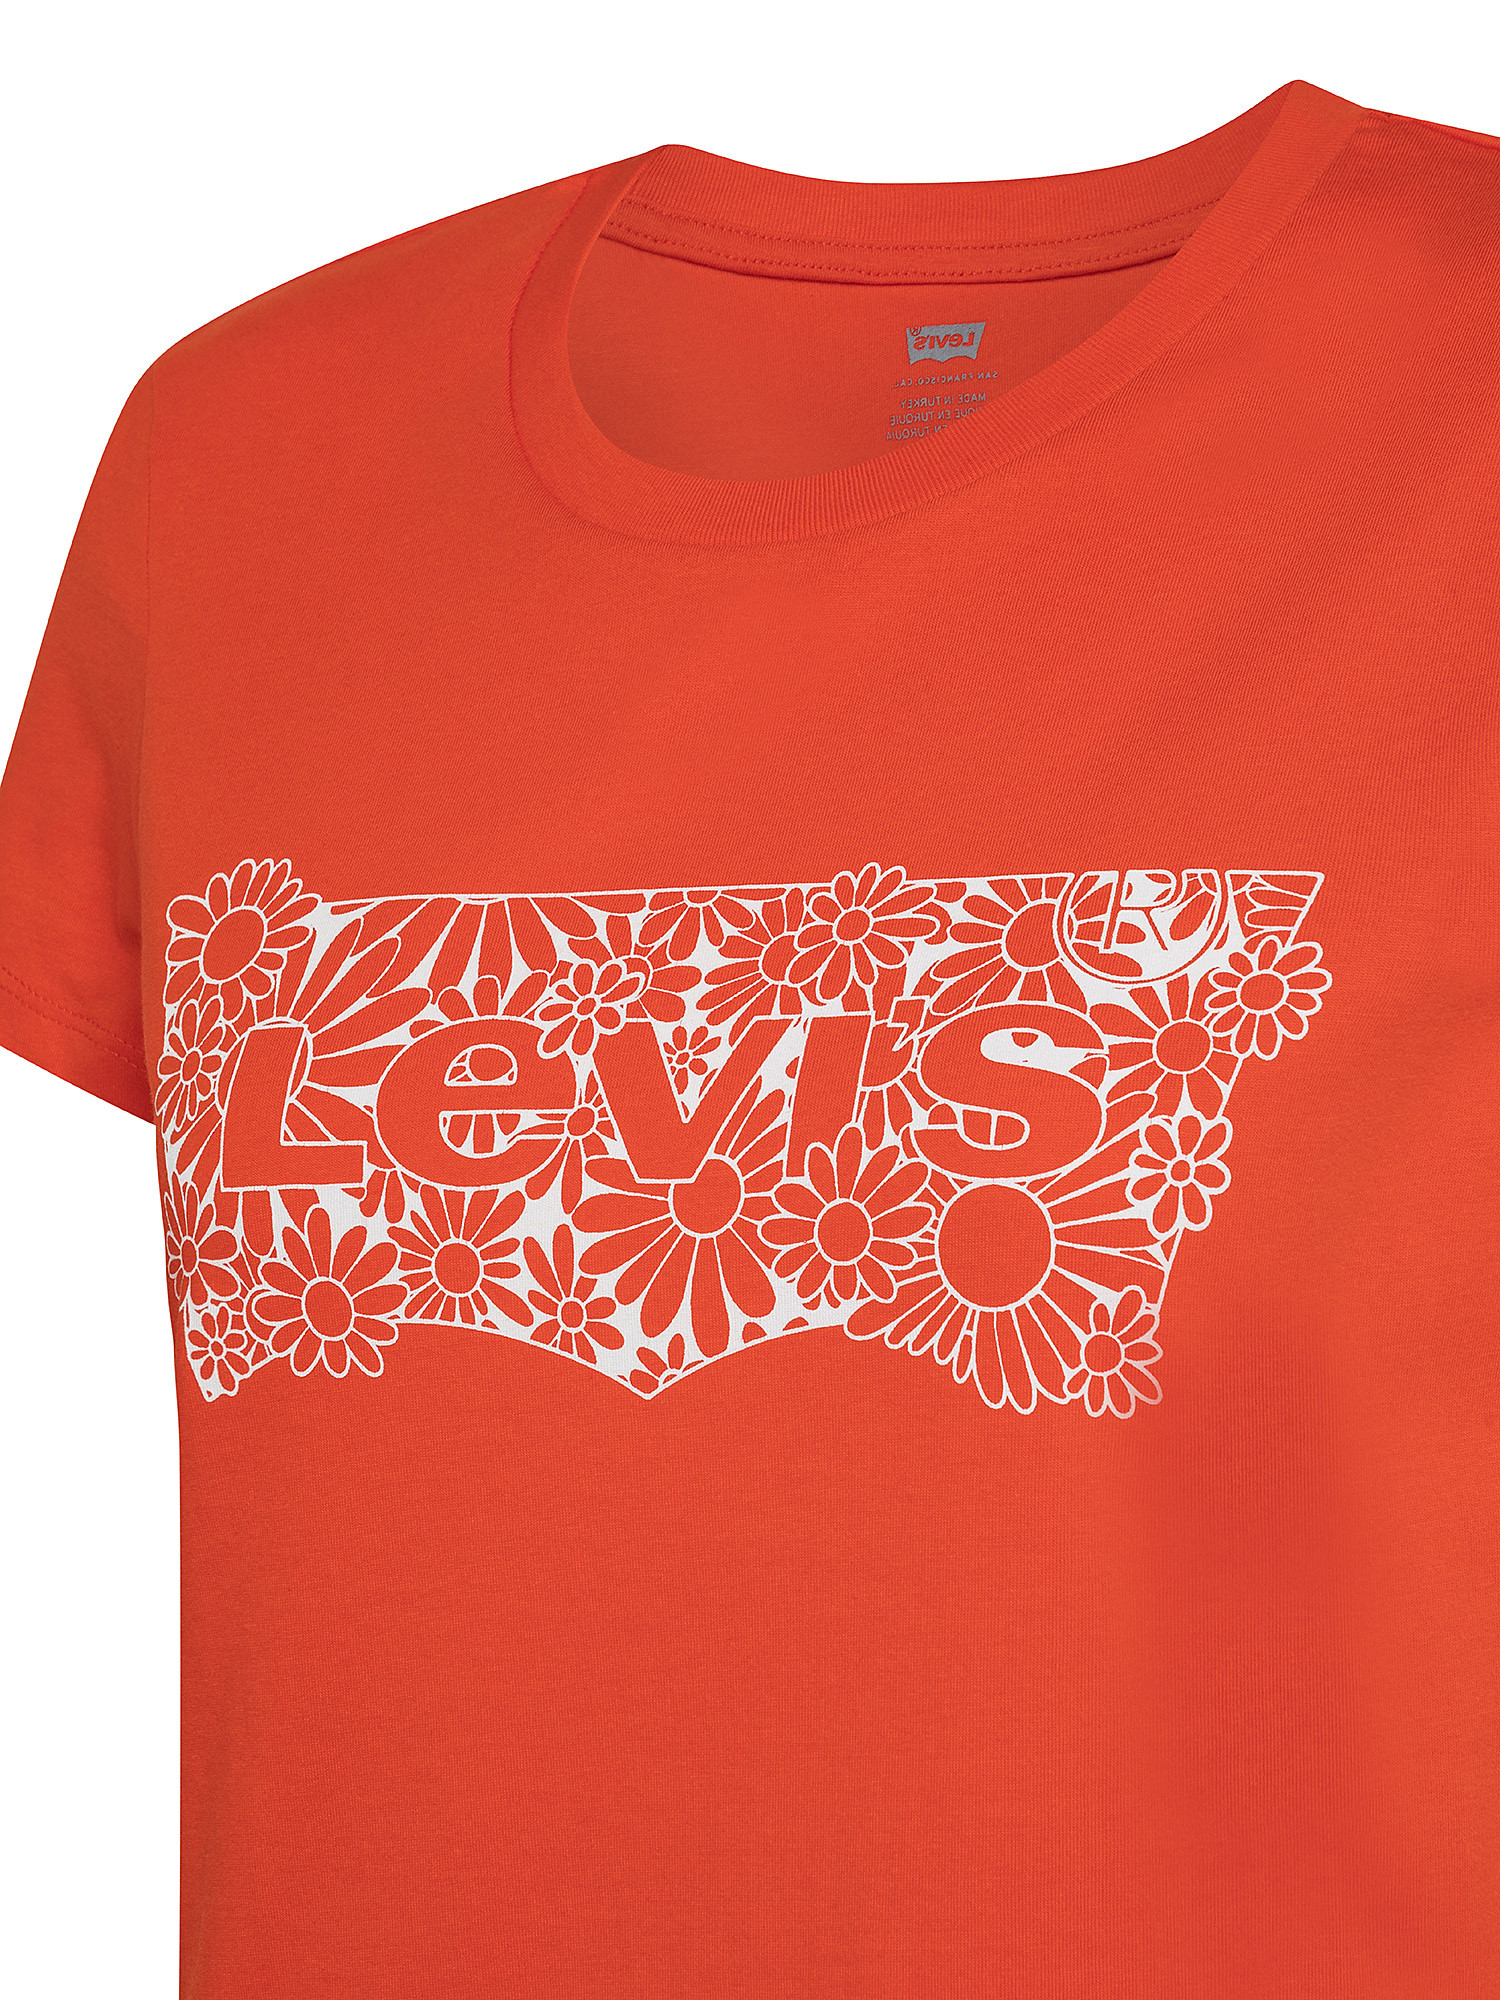 T-shirt Perfect Tee con logo , Arancione, large image number 2